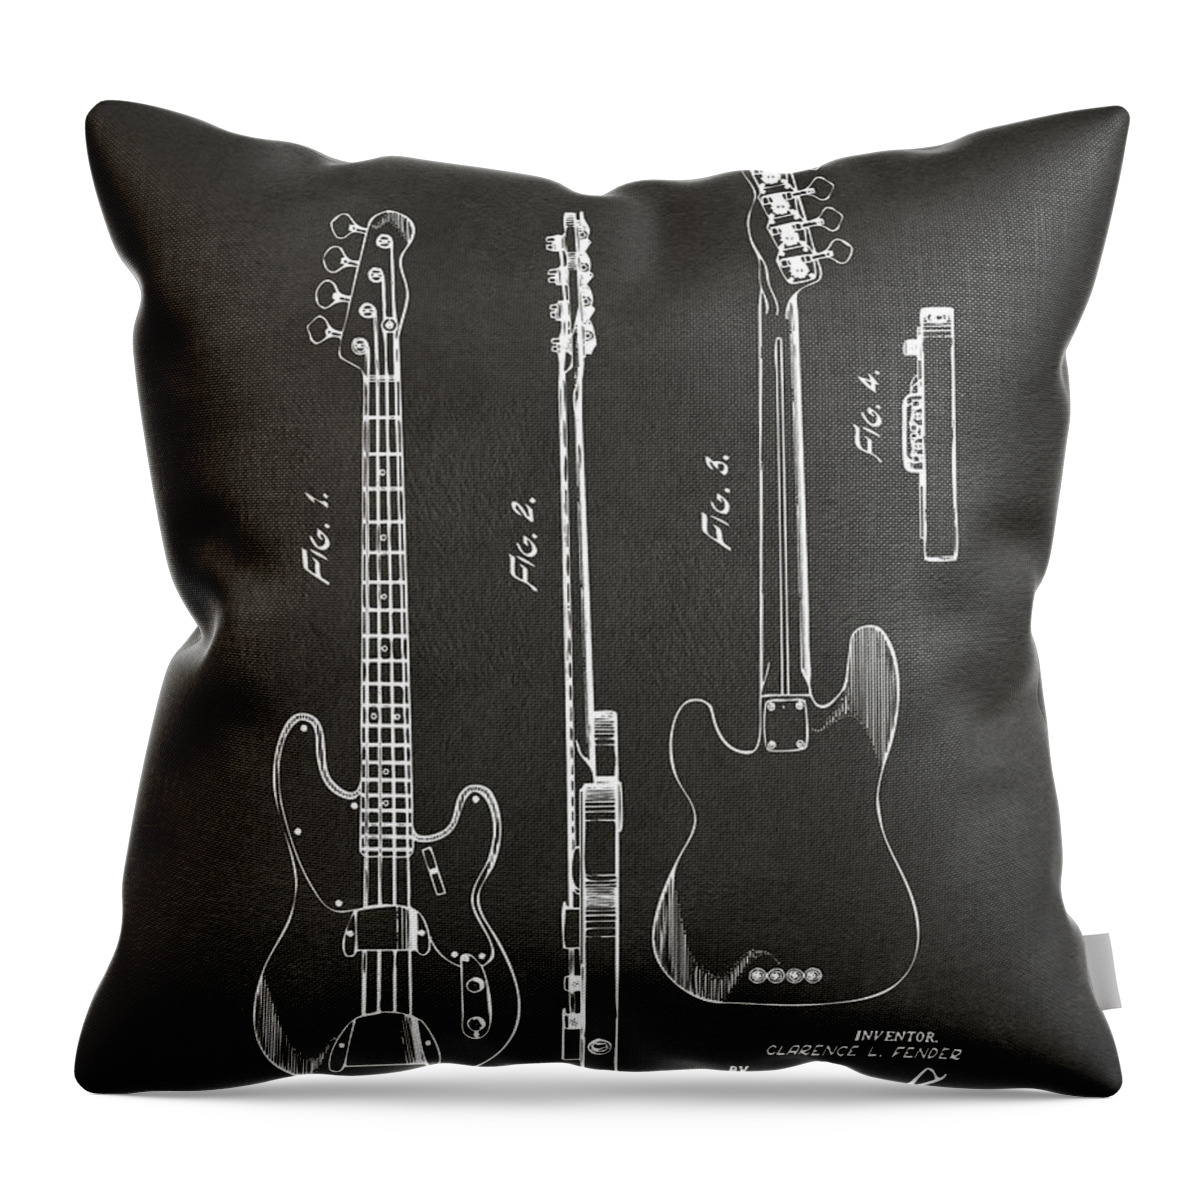 Fender Guitar Throw Pillow featuring the digital art 1953 Fender Bass Guitar Patent Artwork - Gray by Nikki Marie Smith